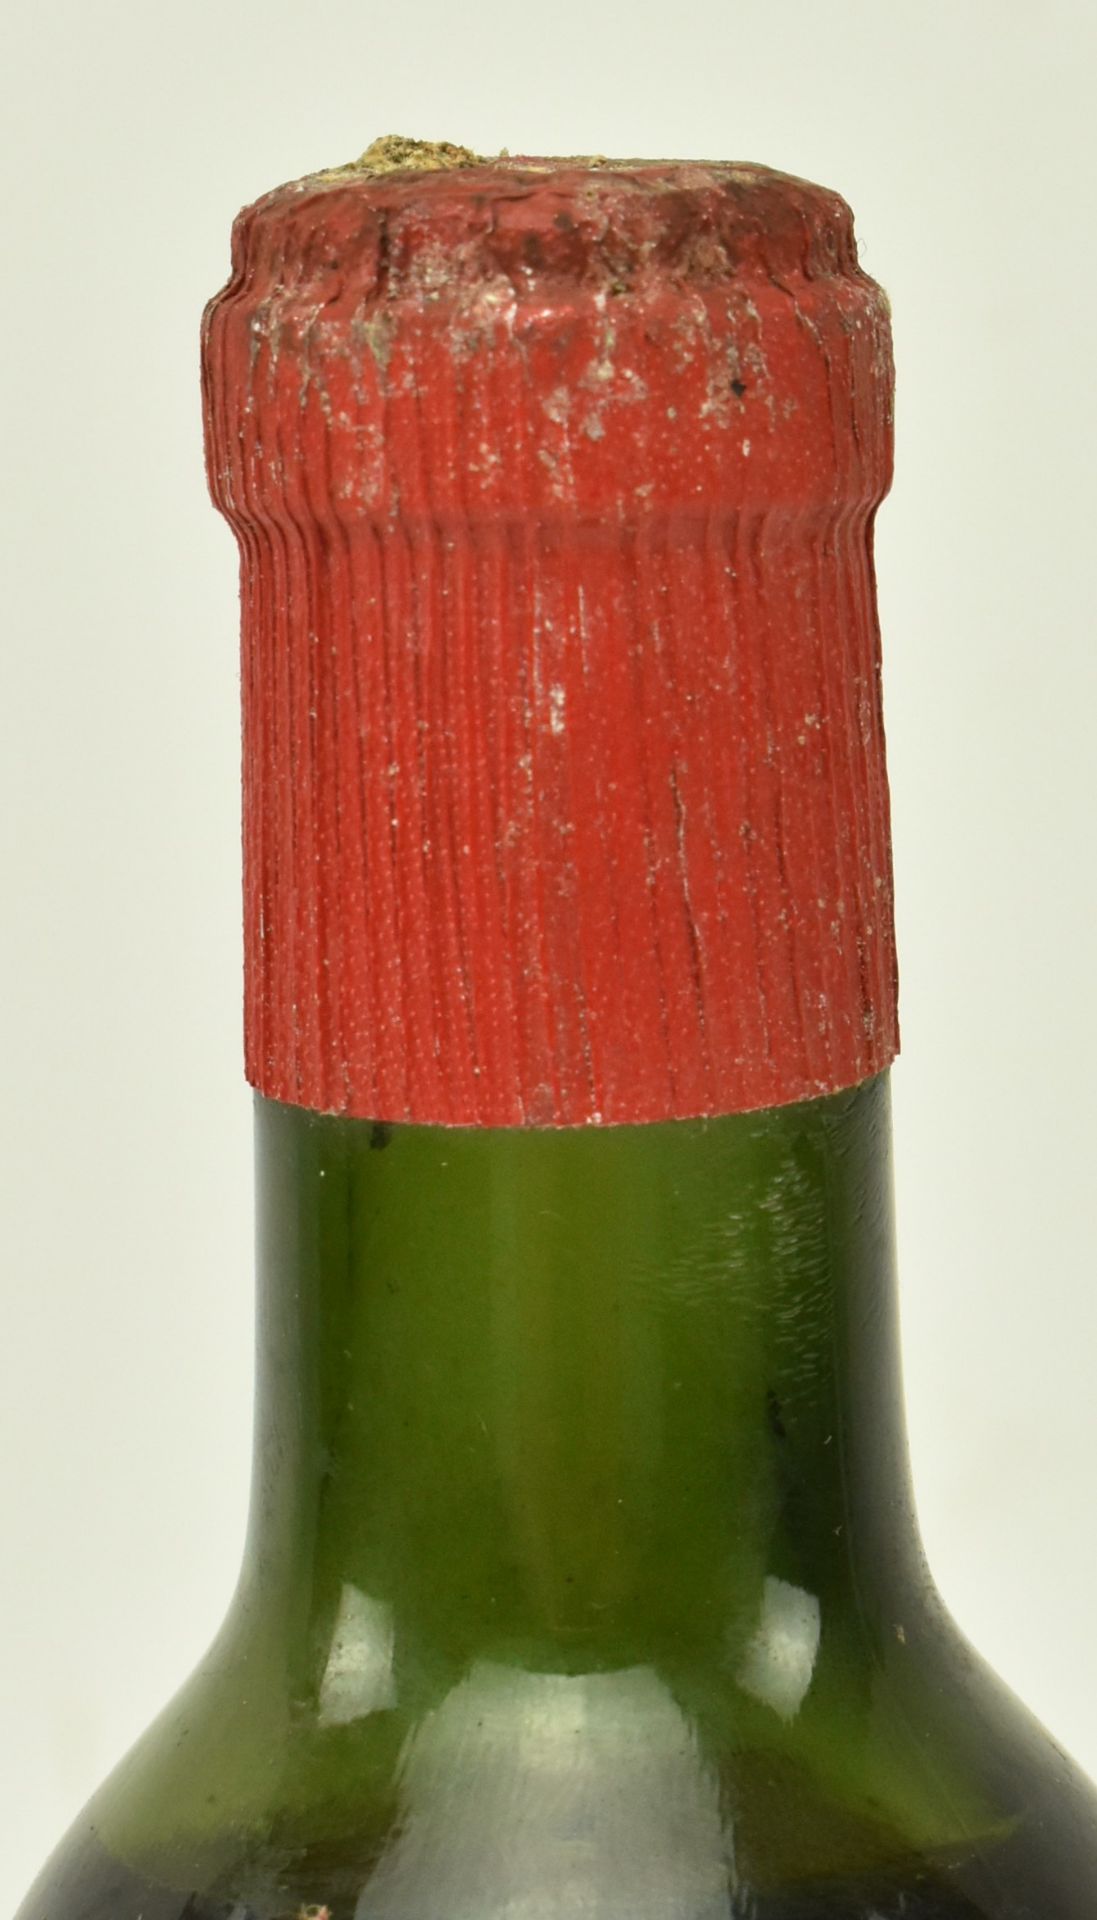 1943 CHATEAU LA GARDE RED WINE BOTTLE - Image 3 of 6